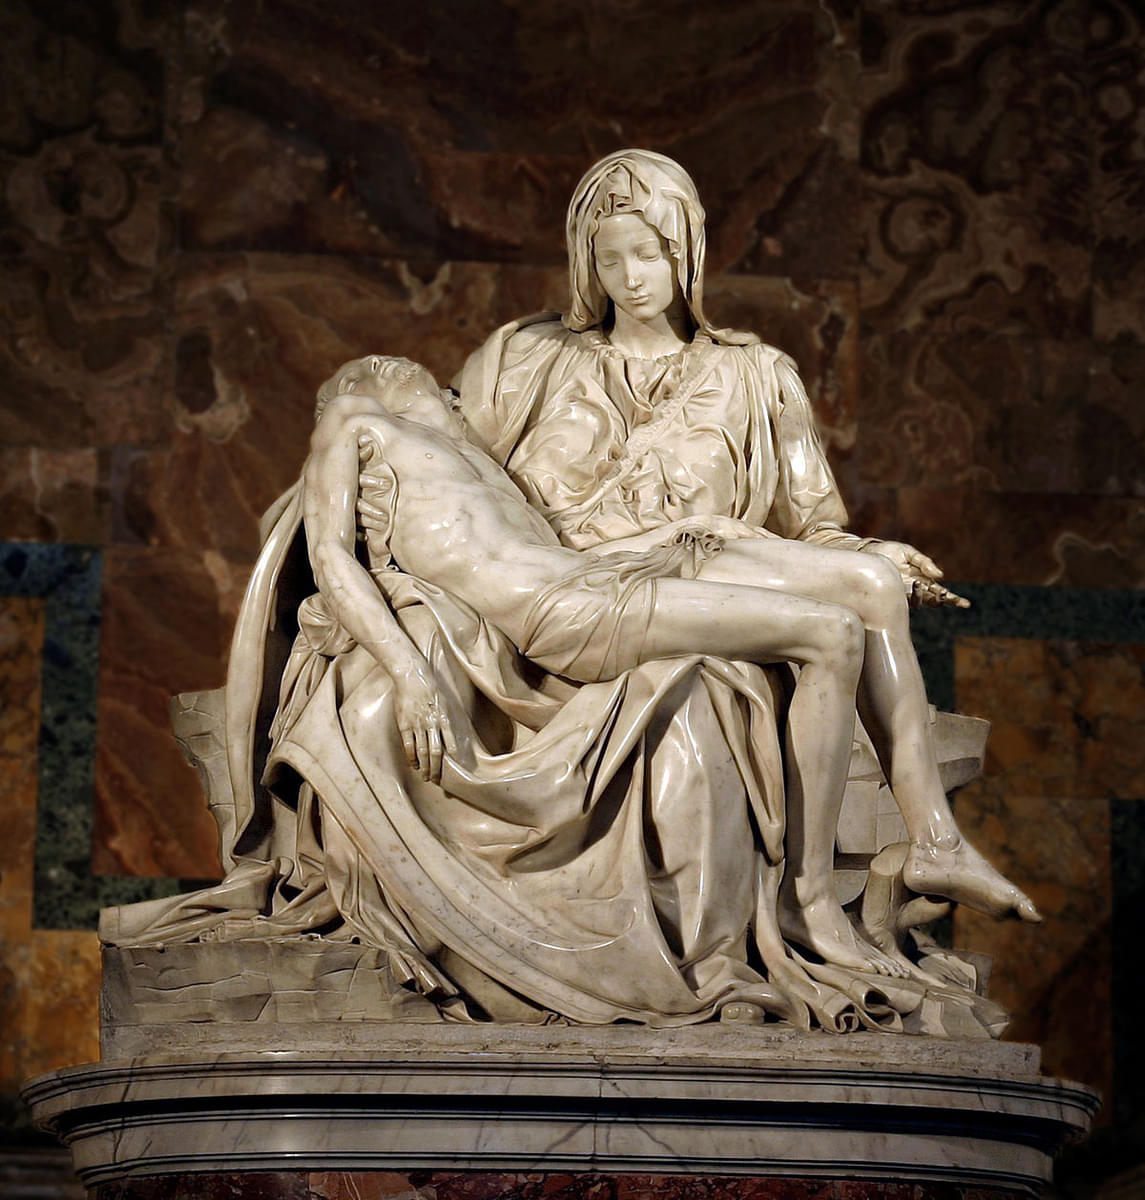 Michelangelo's Contribution